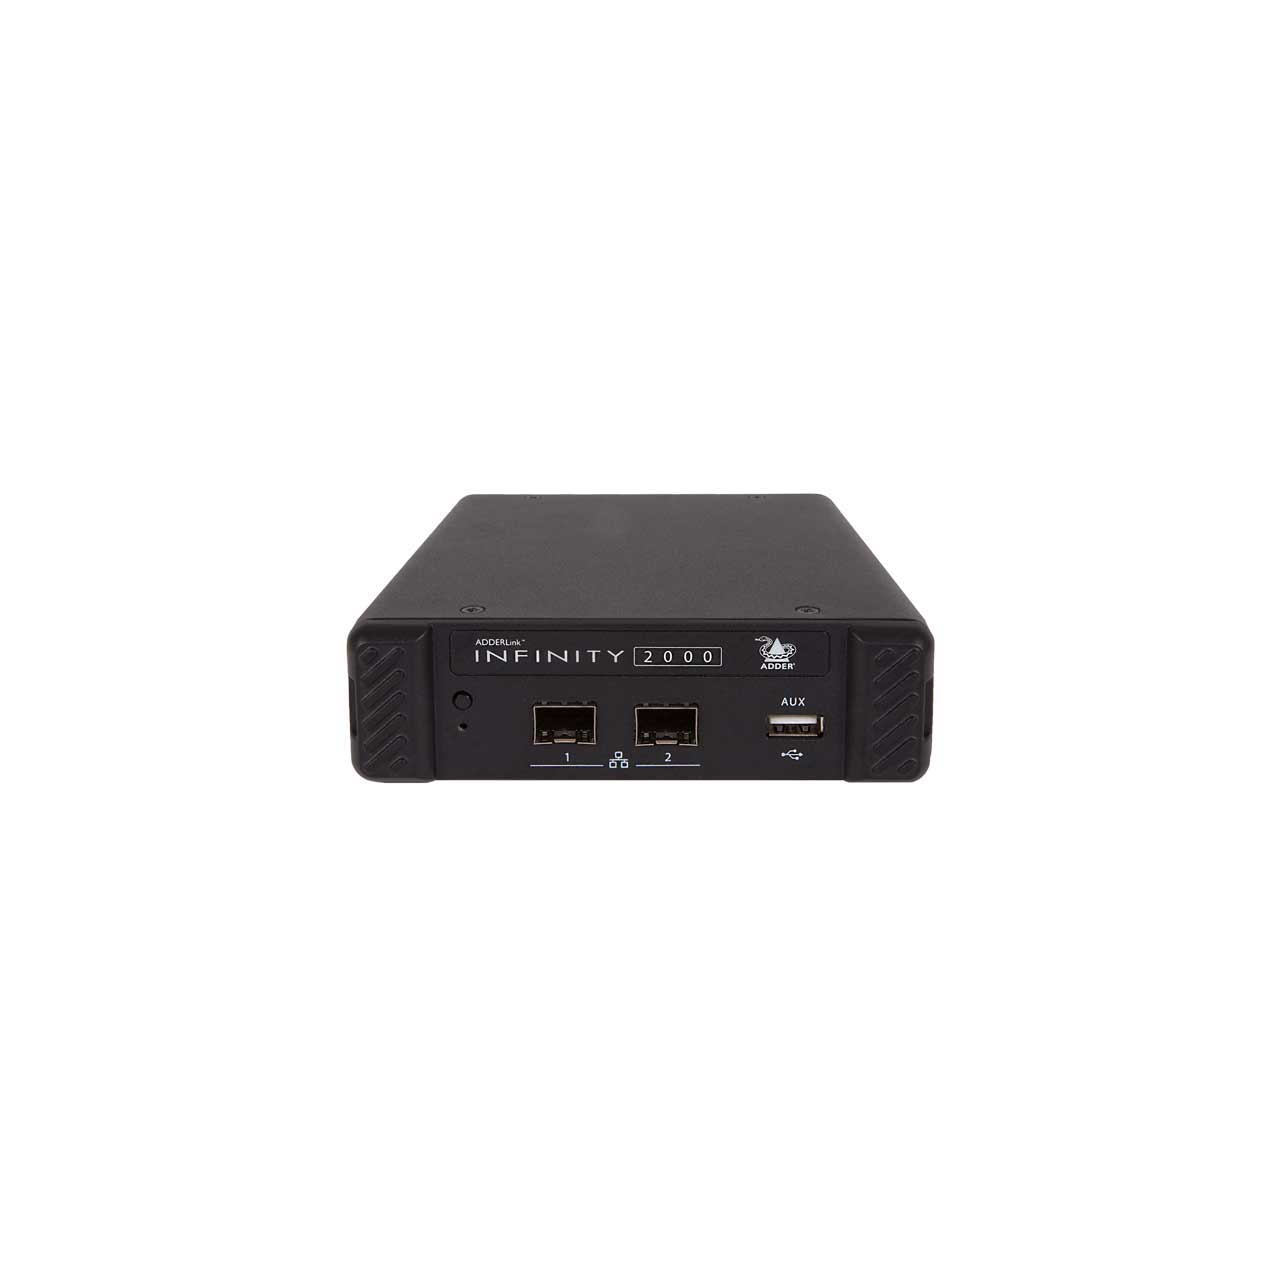 Adder ADDERLink INFINITY 2122 Dual-head Digital Video/Audio & USB2.0 over 1GbE IP Network KVM Extender - Transmitter ADR-ALIF2122T-US